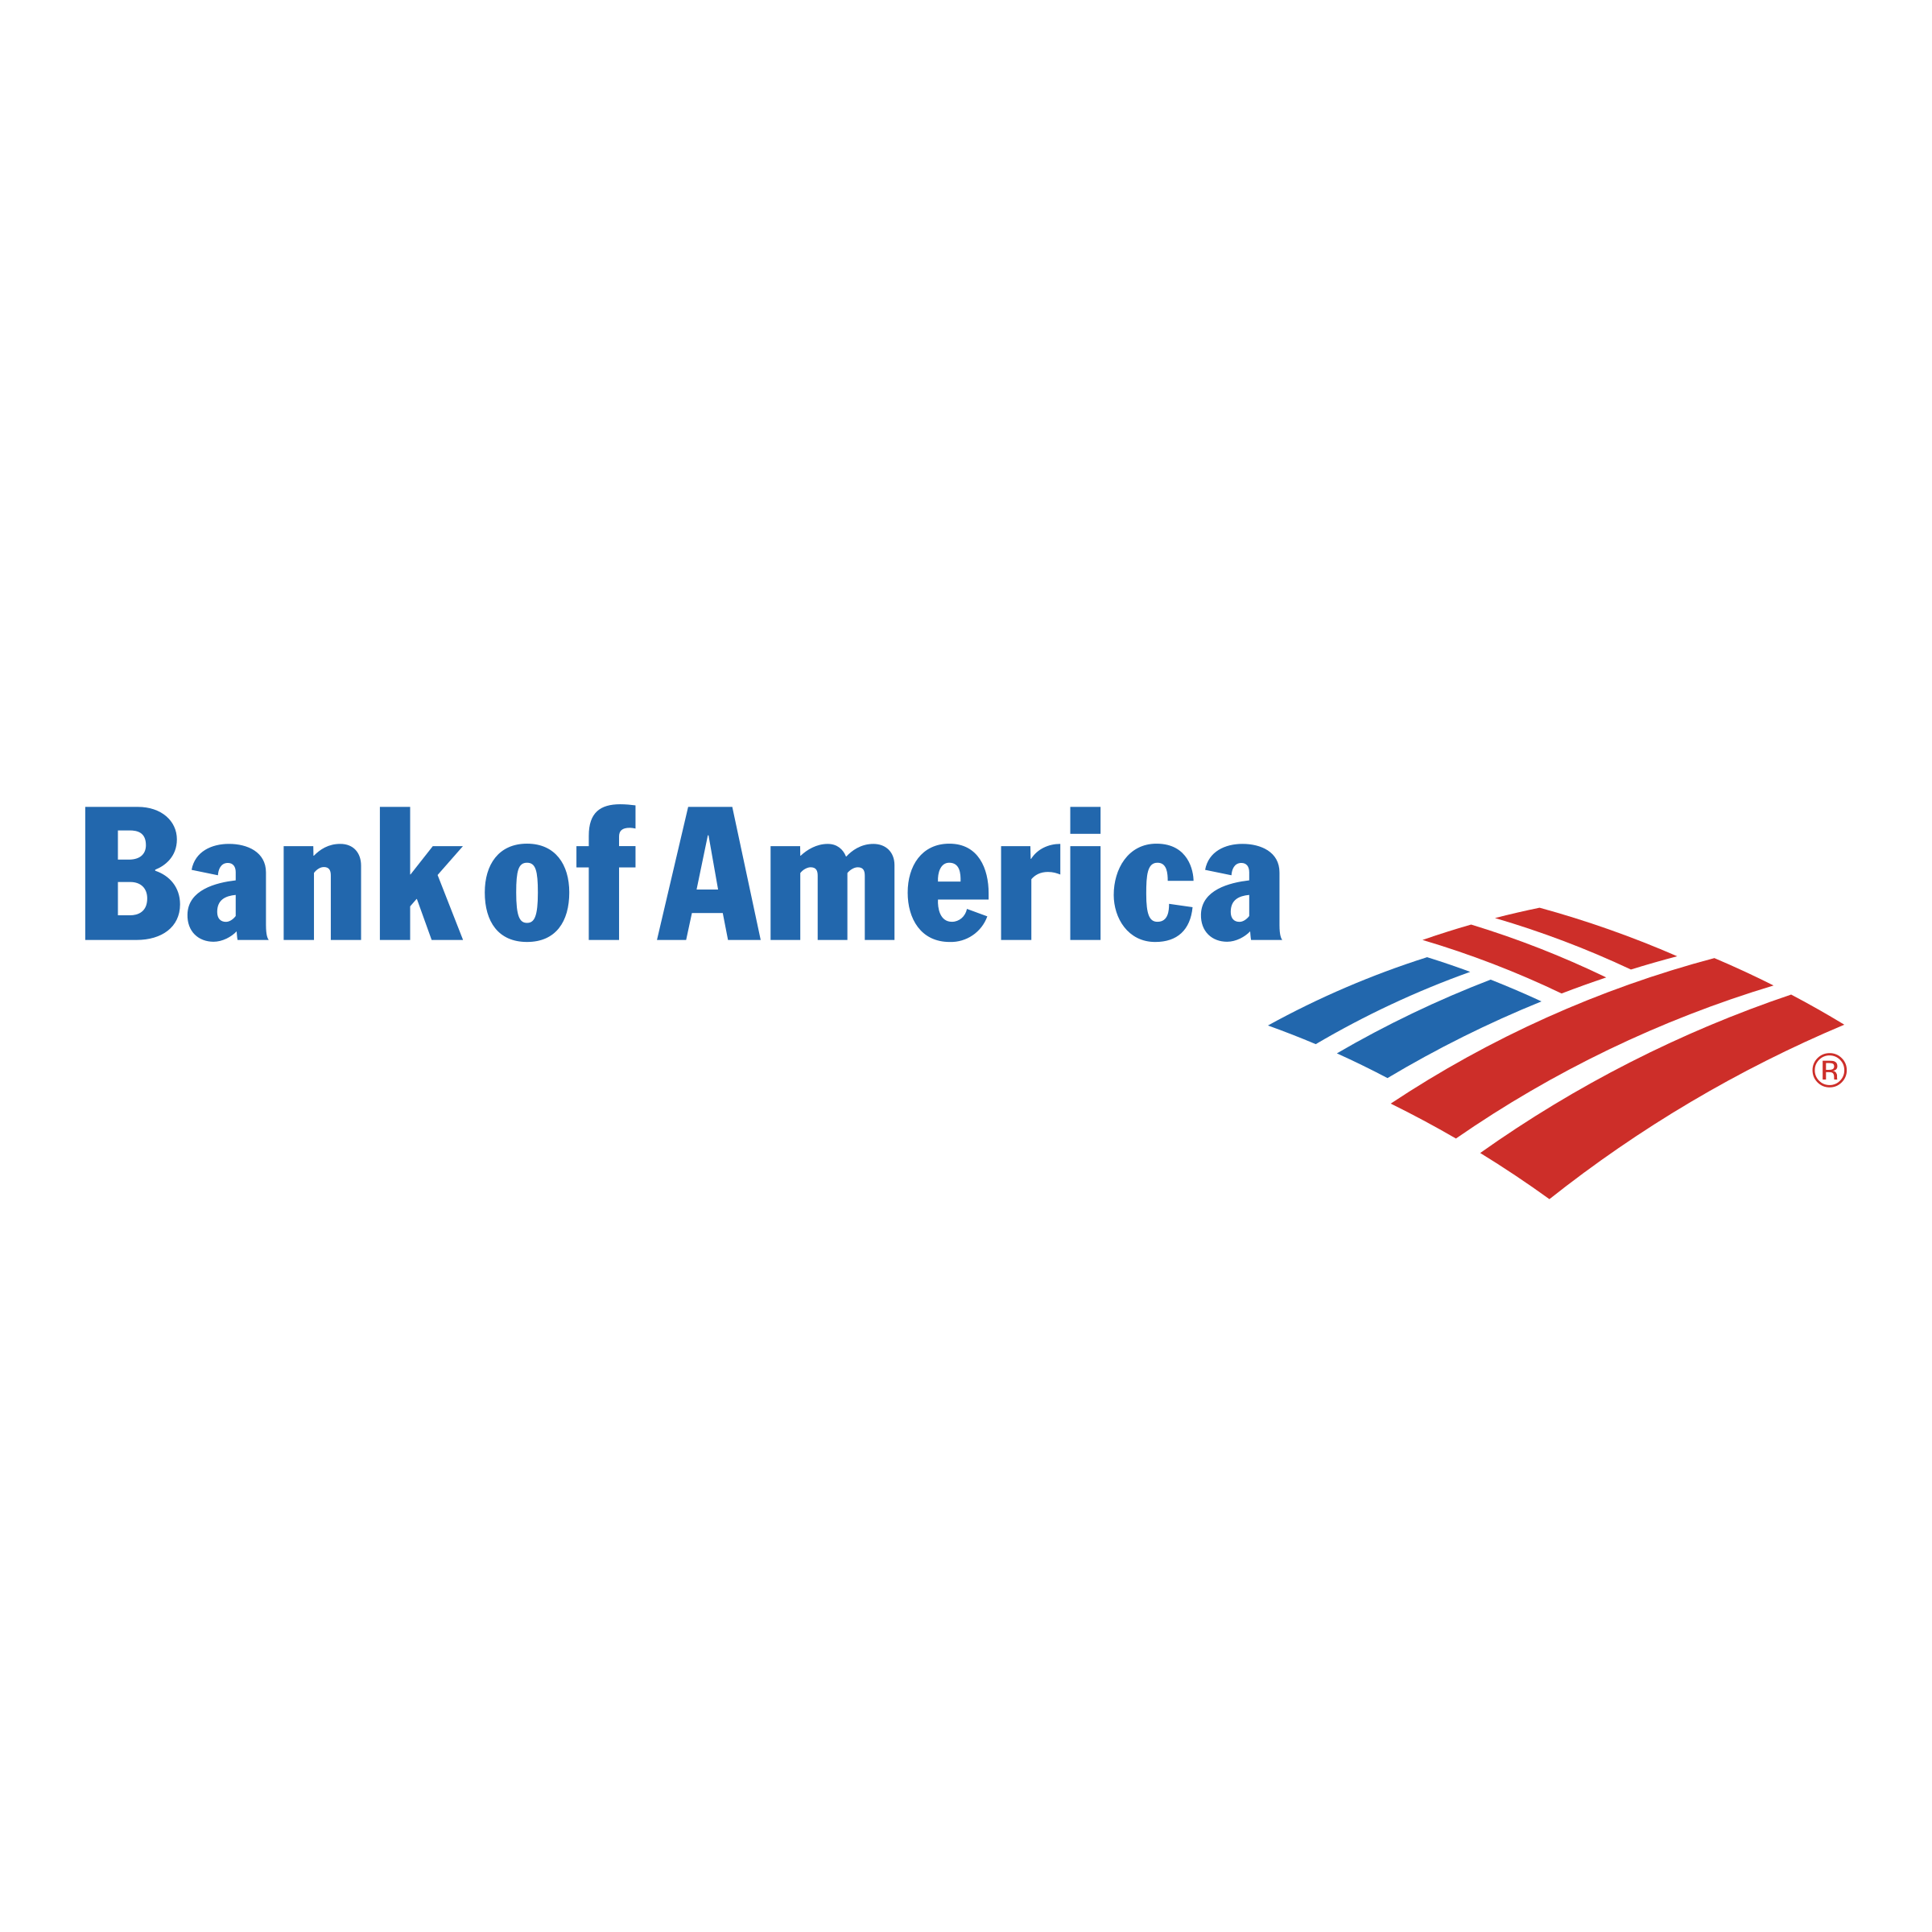 Logo of Bank of America HD Transparent PNG Image pngteam.com